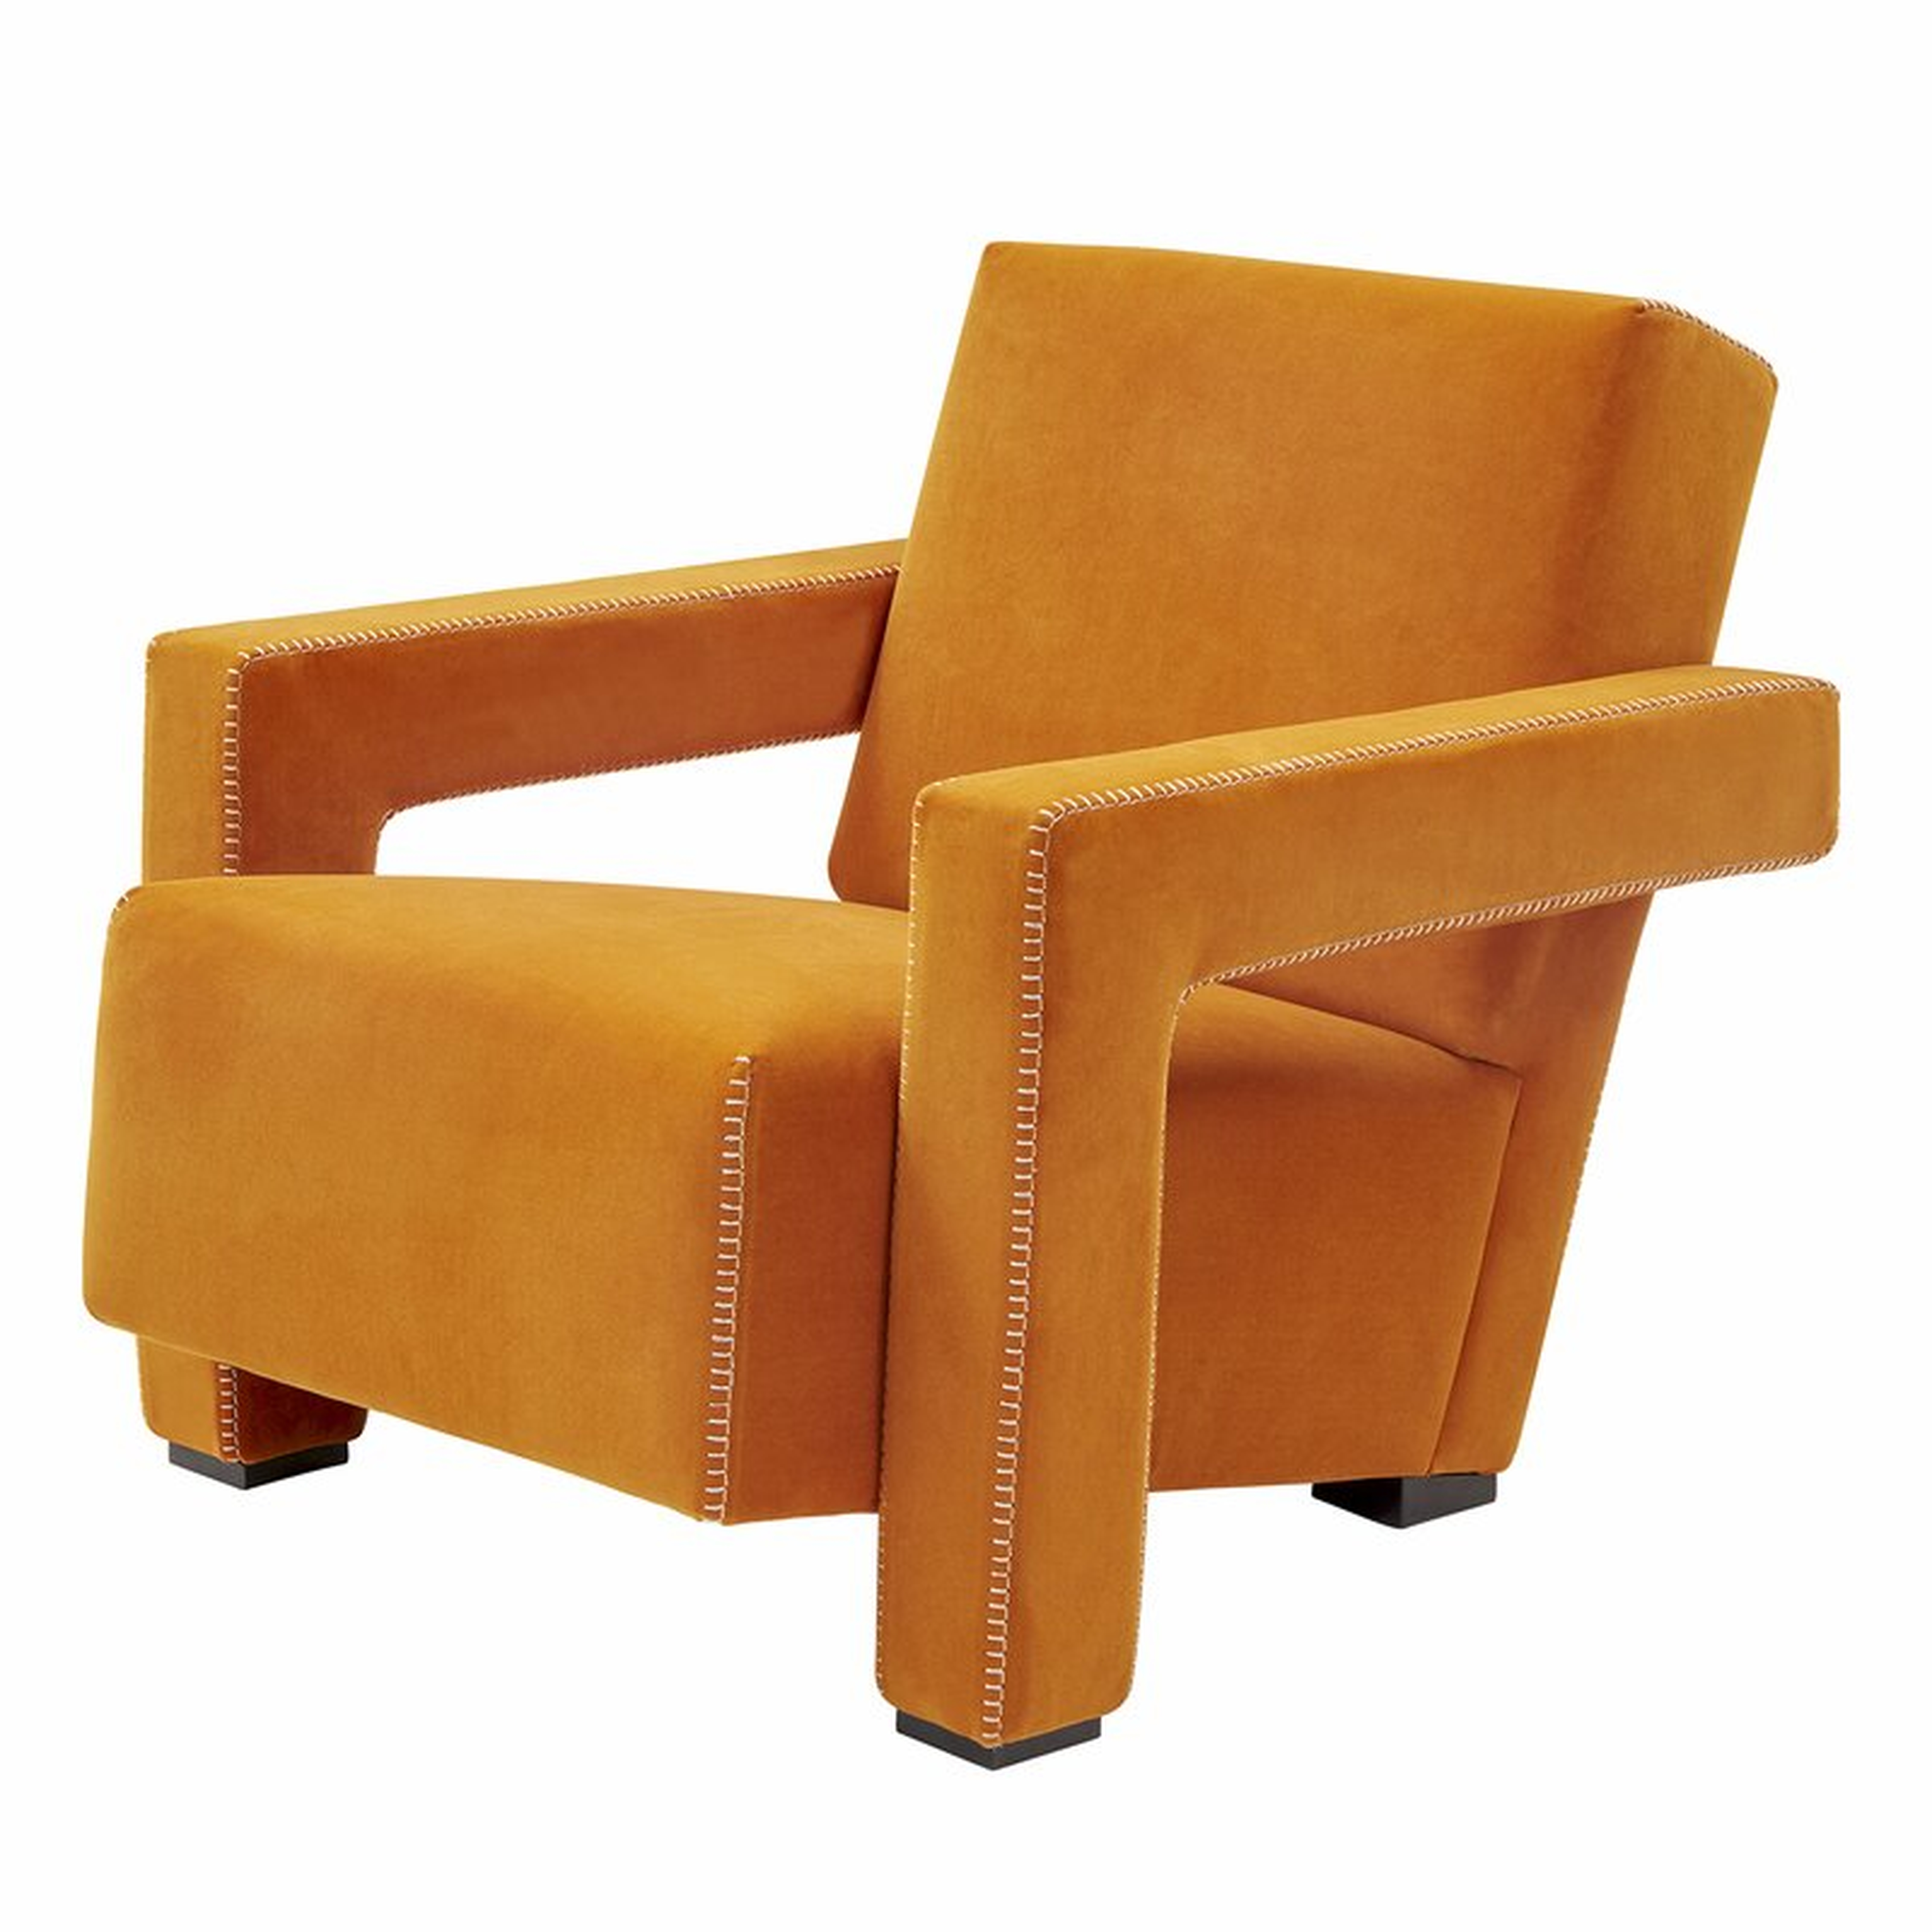 Fleischer Lounge Chair - Wayfair